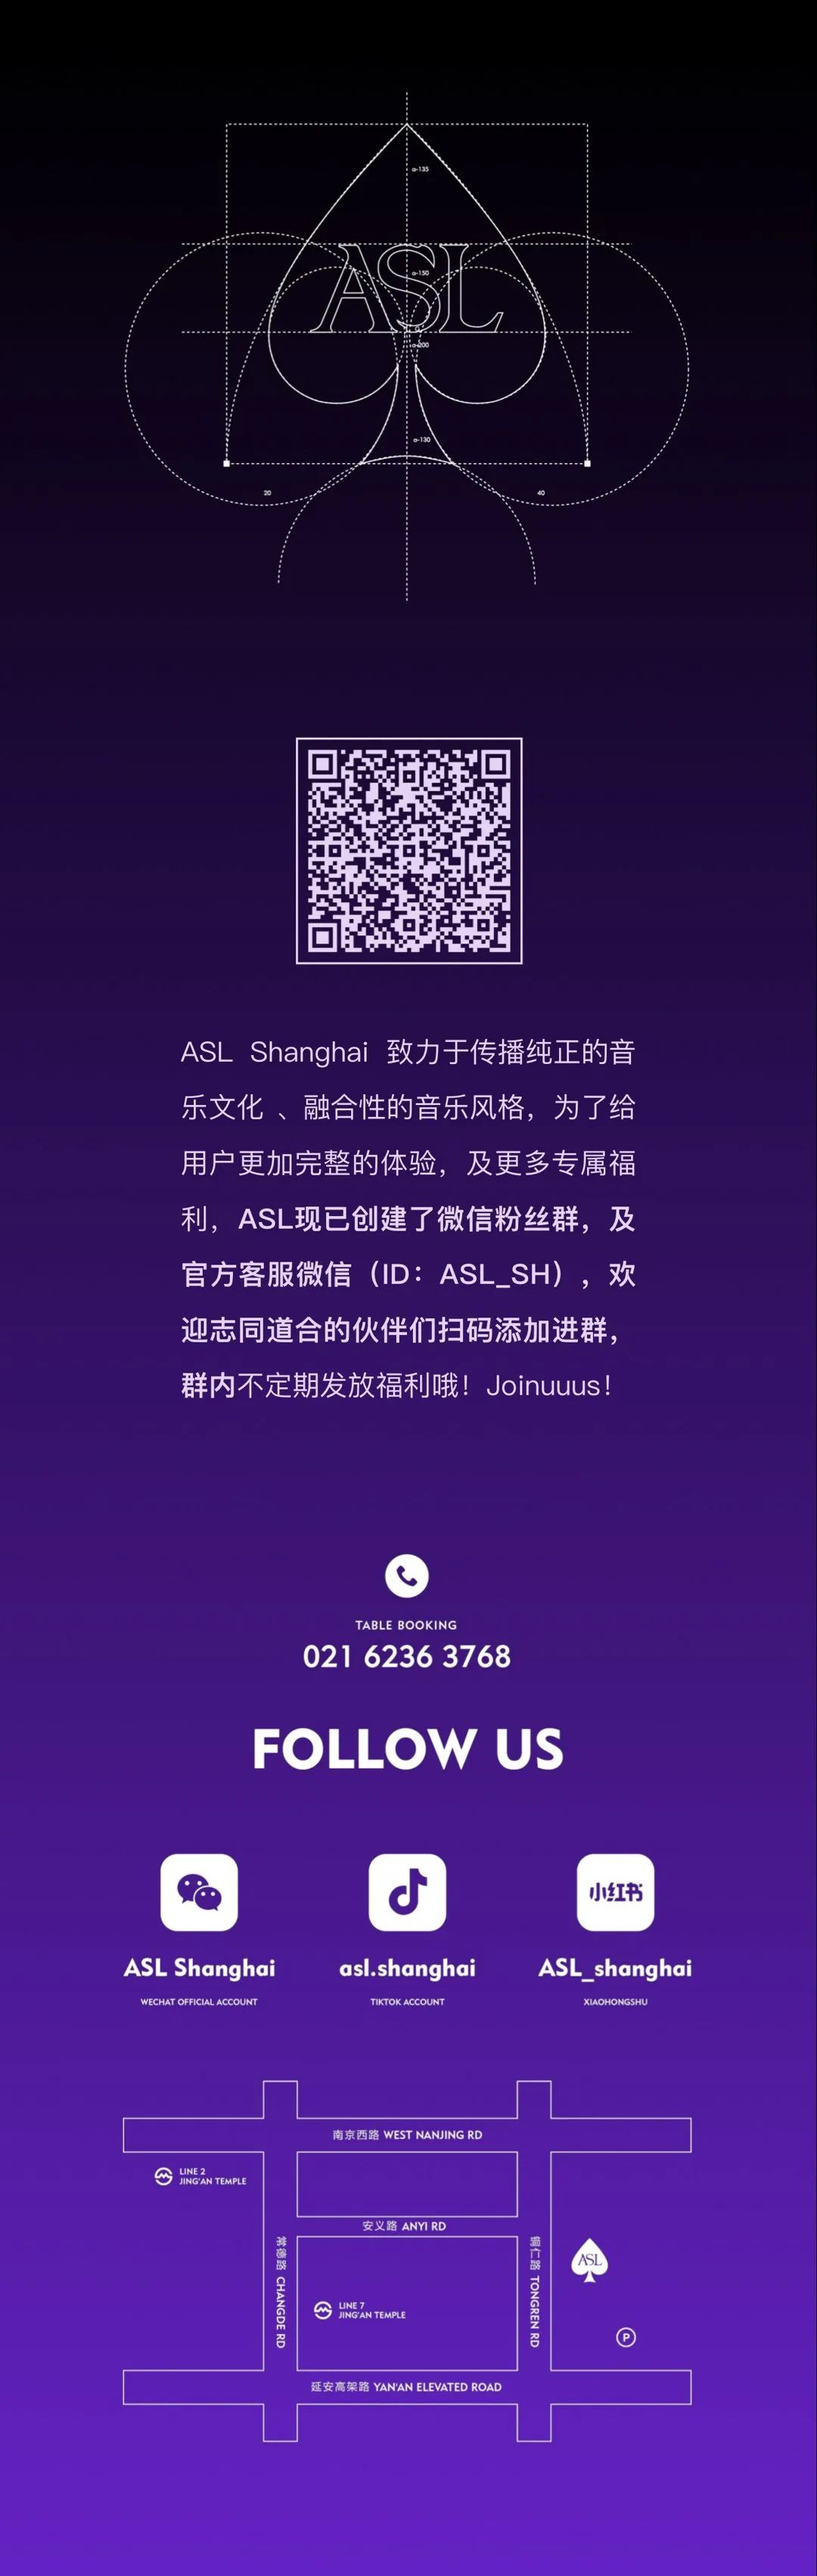 ASL HOLIDAY JOY｜一起过假期吧-上海ASL酒吧/ASL Club